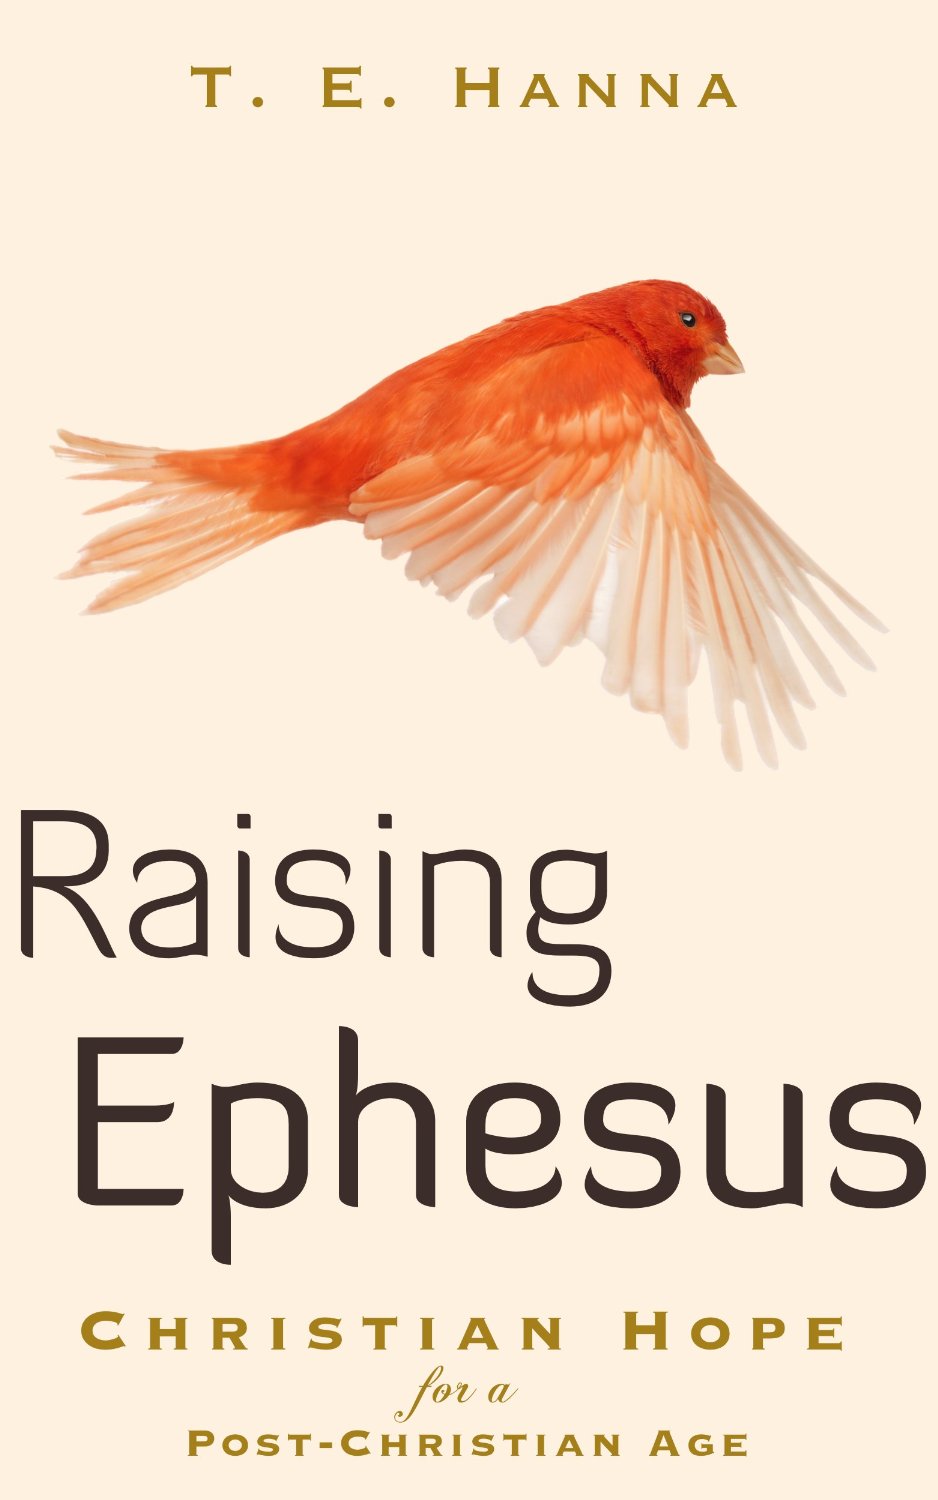 Raising Ephesus: Christian Hope for a Post-Christian Age by T. E. Hanna